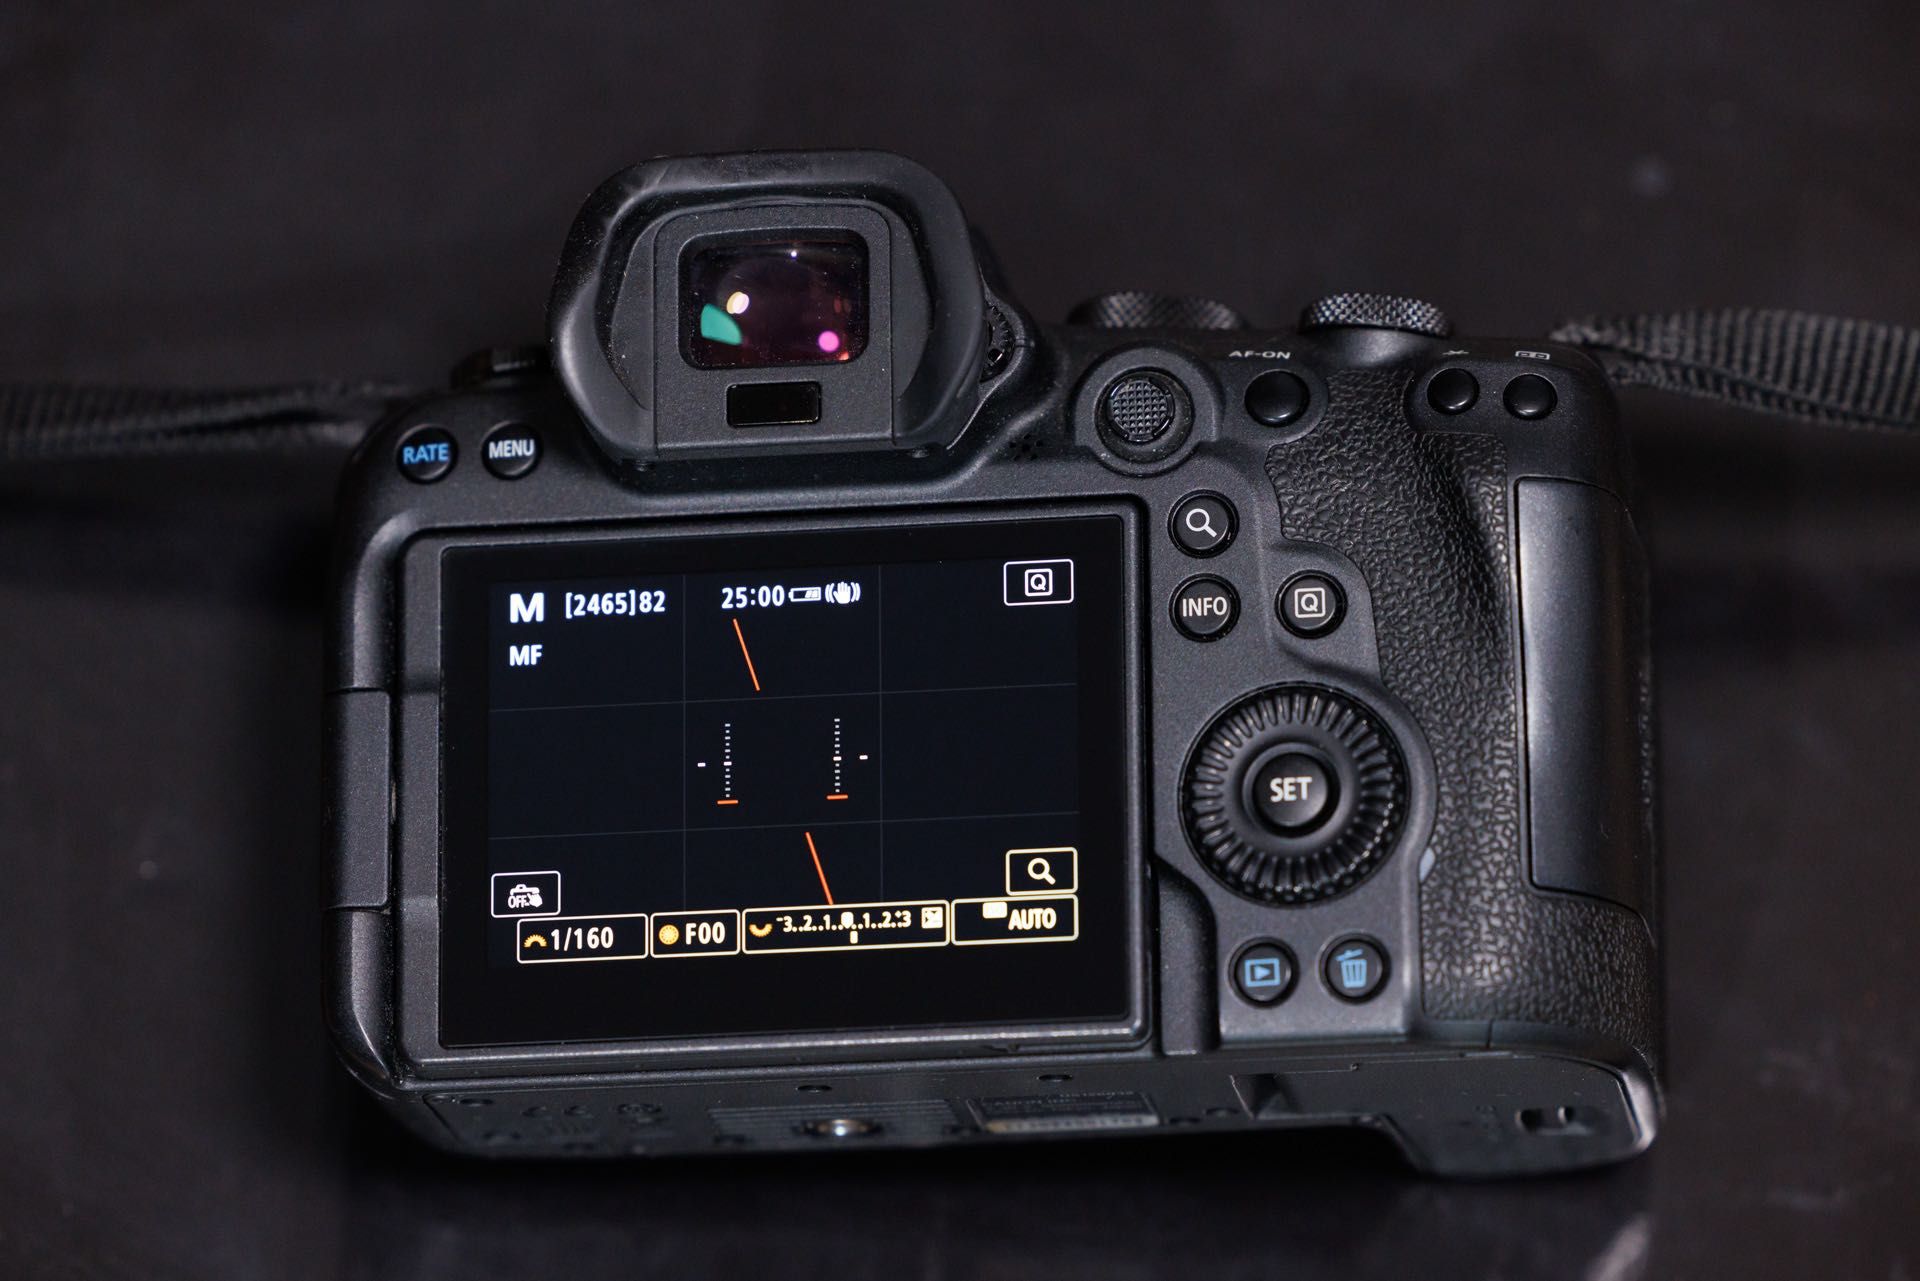 Canon EOS R6 Mirrorless Full-Frame